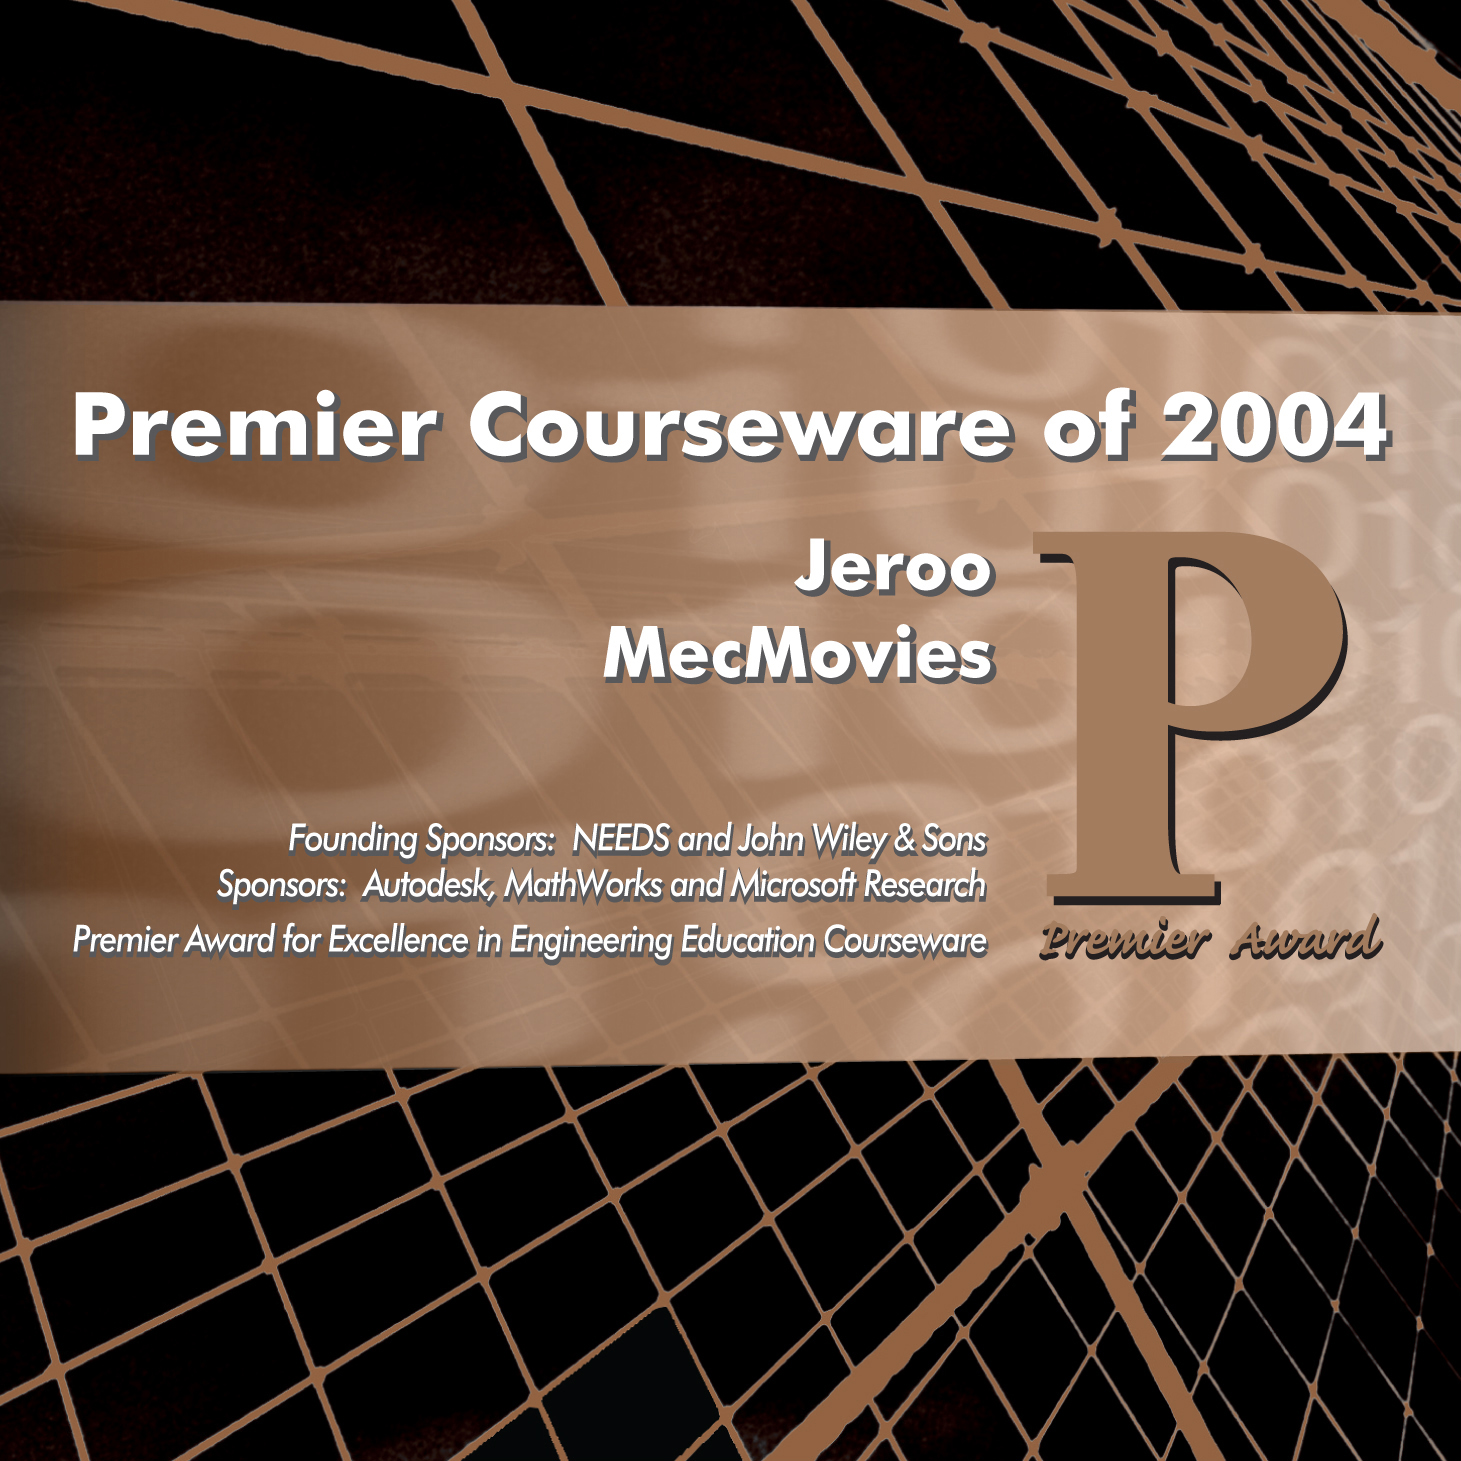 Premier Courseware of 2004